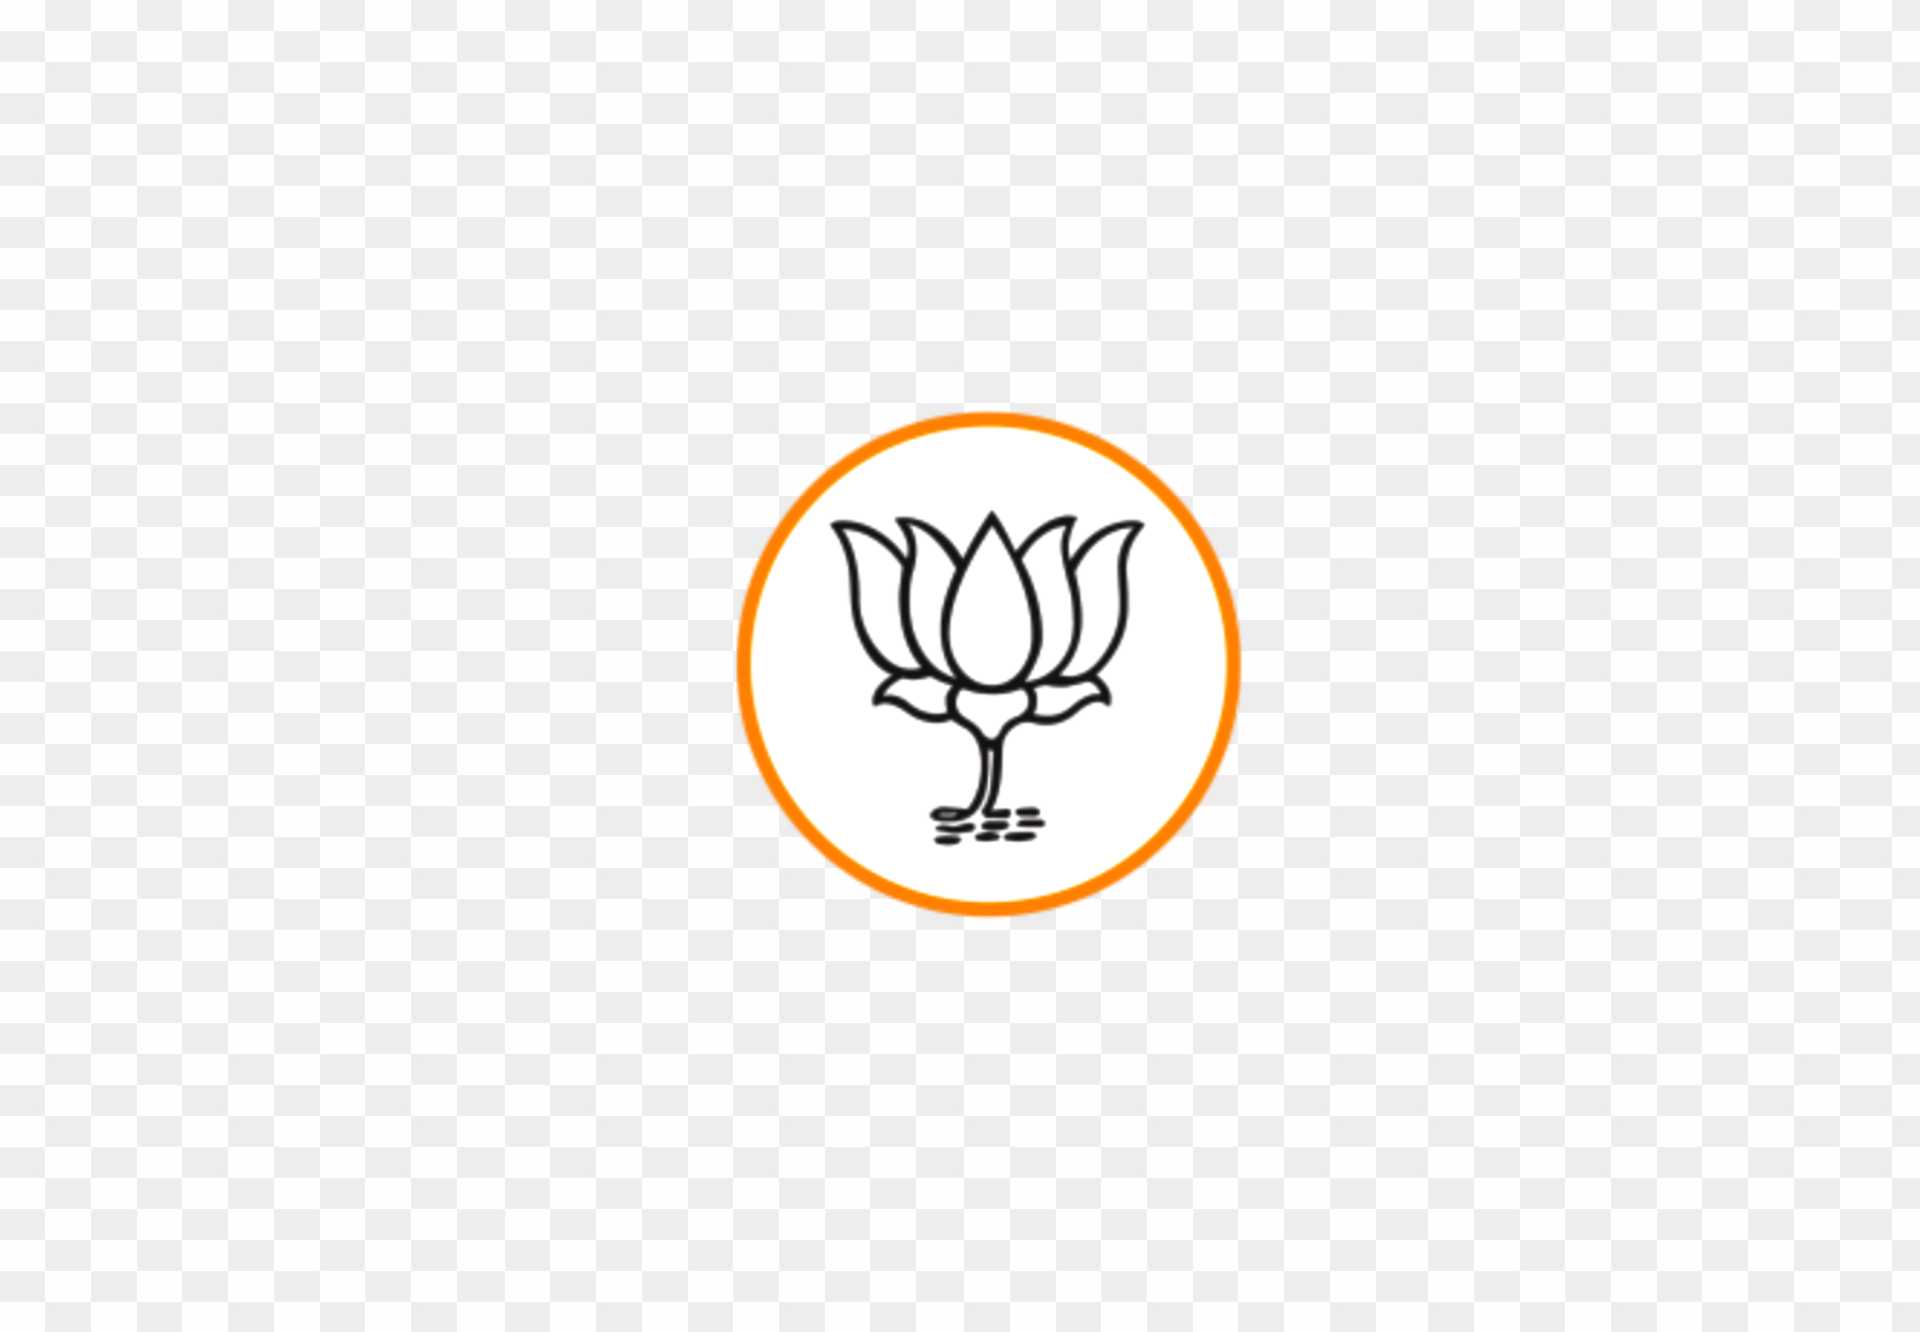 Political Party BJP Coffee/Tea Mug Election Symbol/Chunav Prachaar White  India Narendra modi